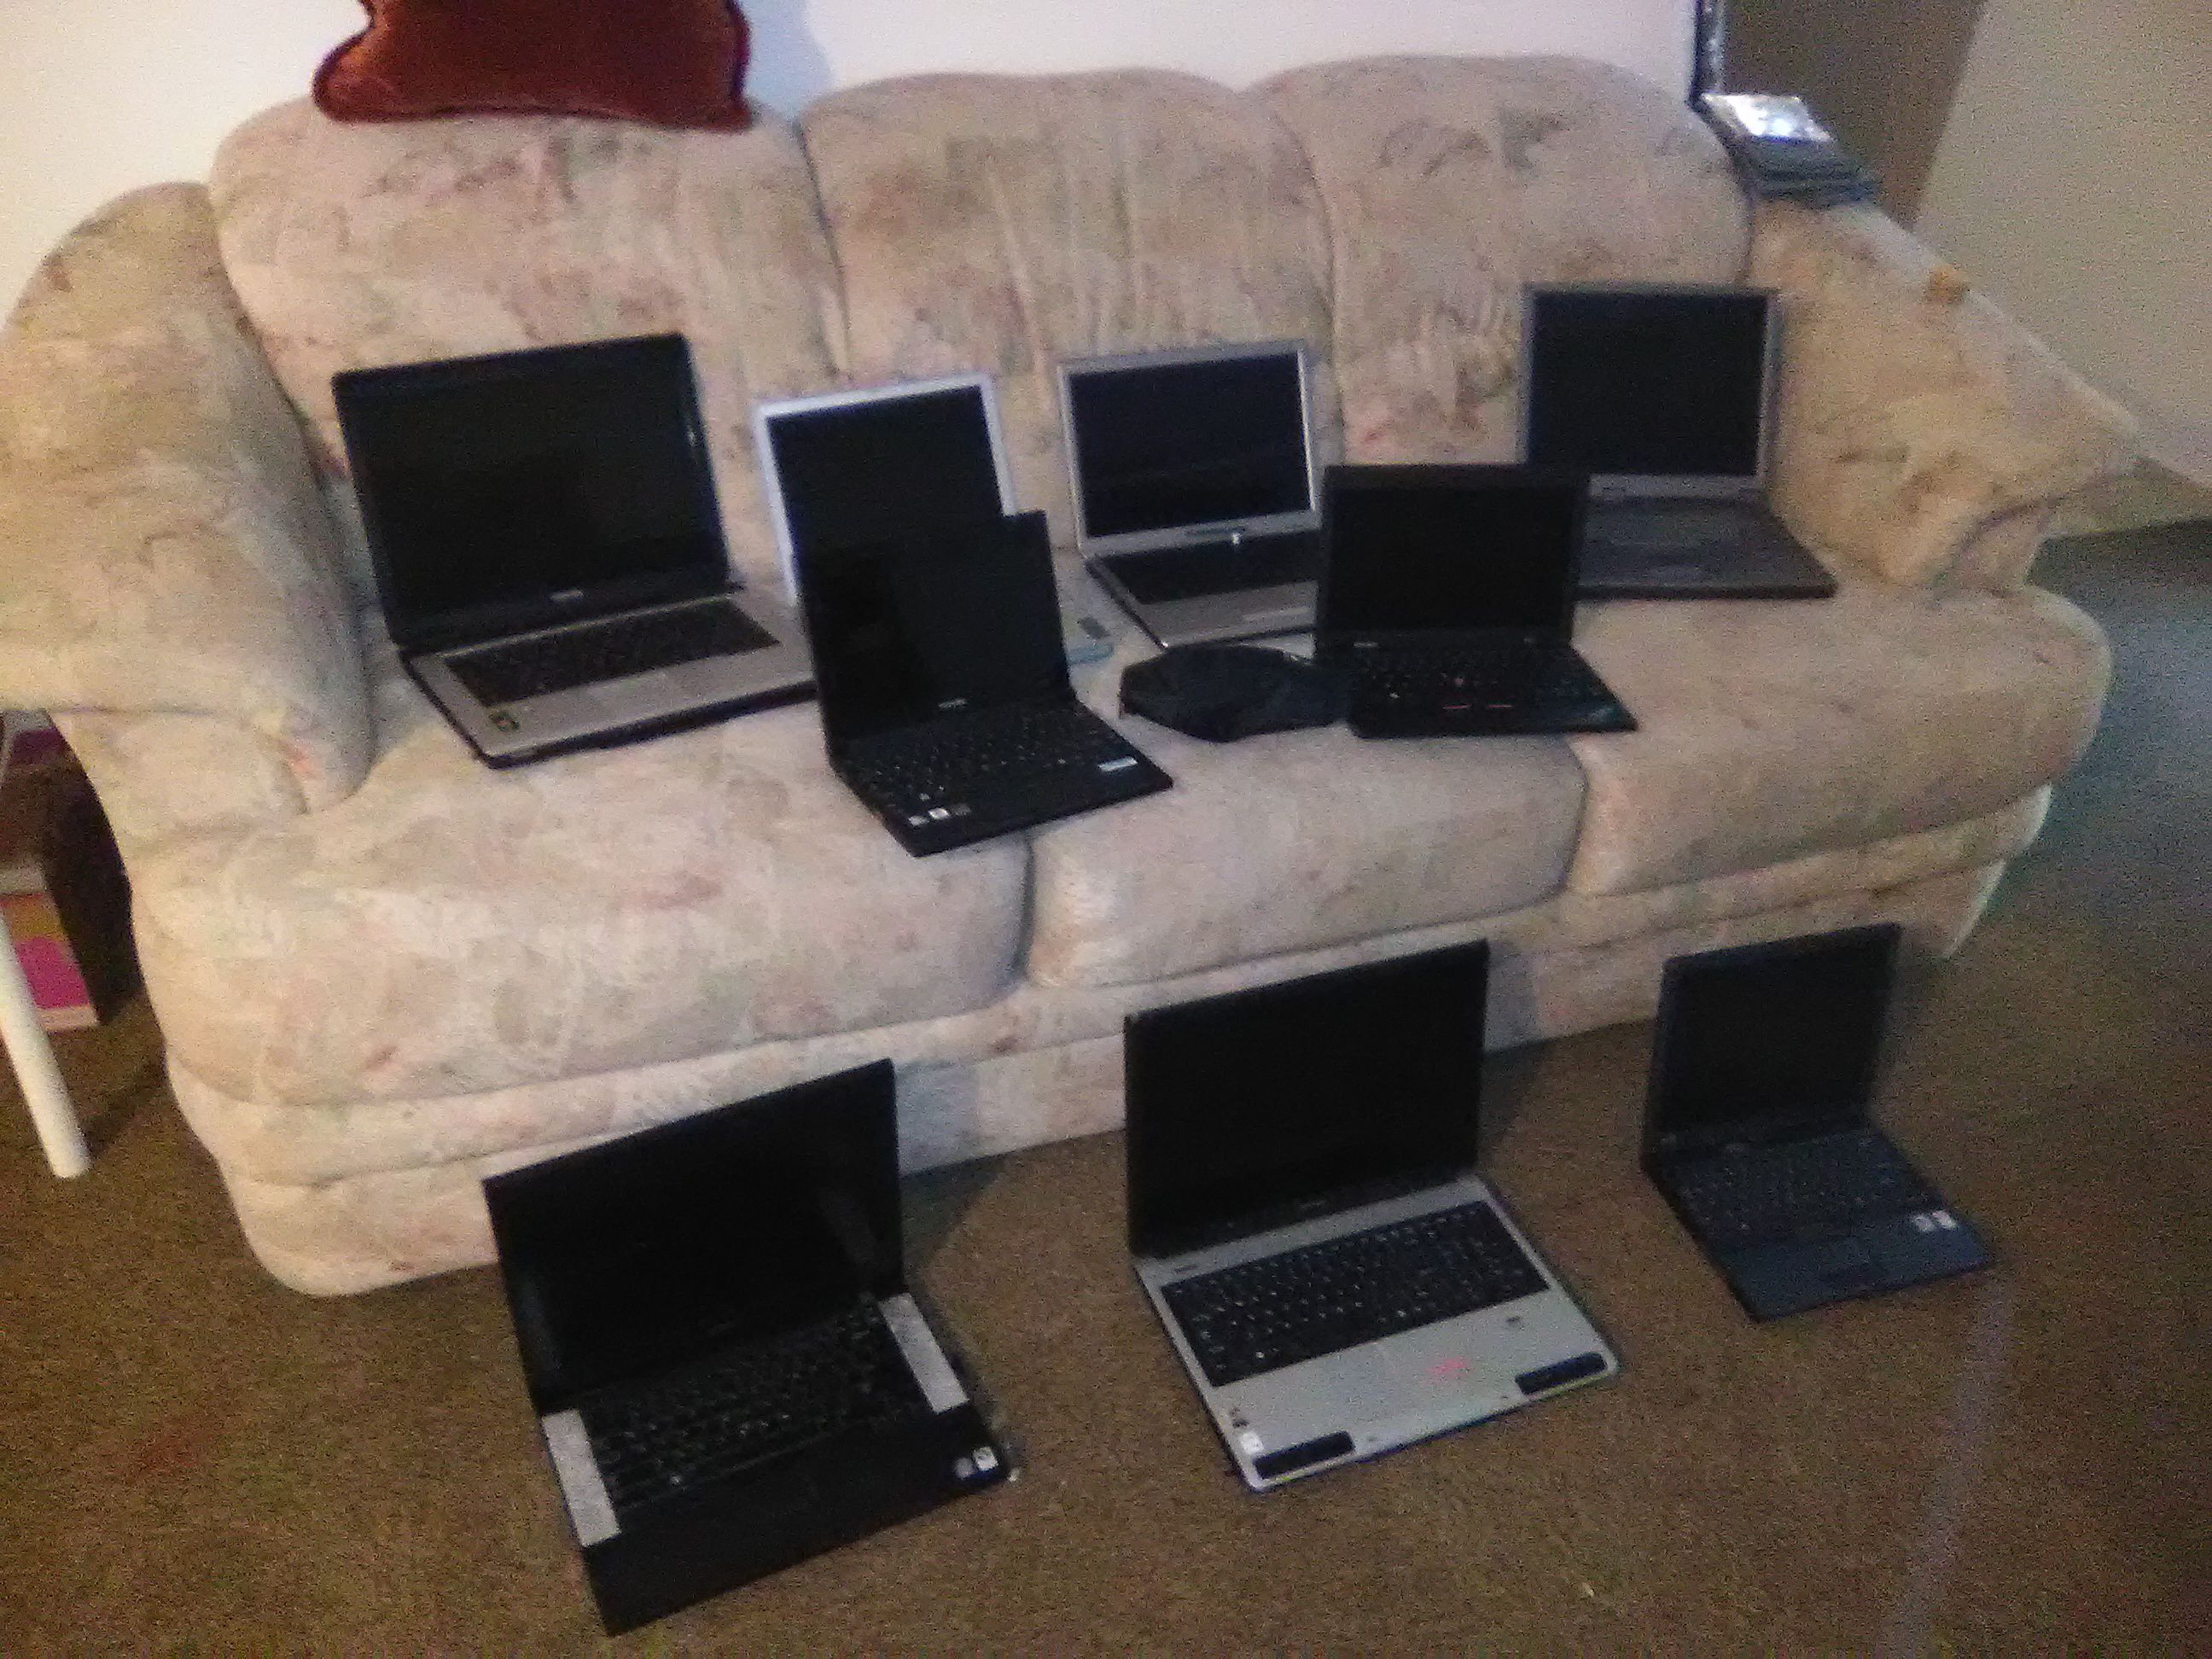 9 laptops